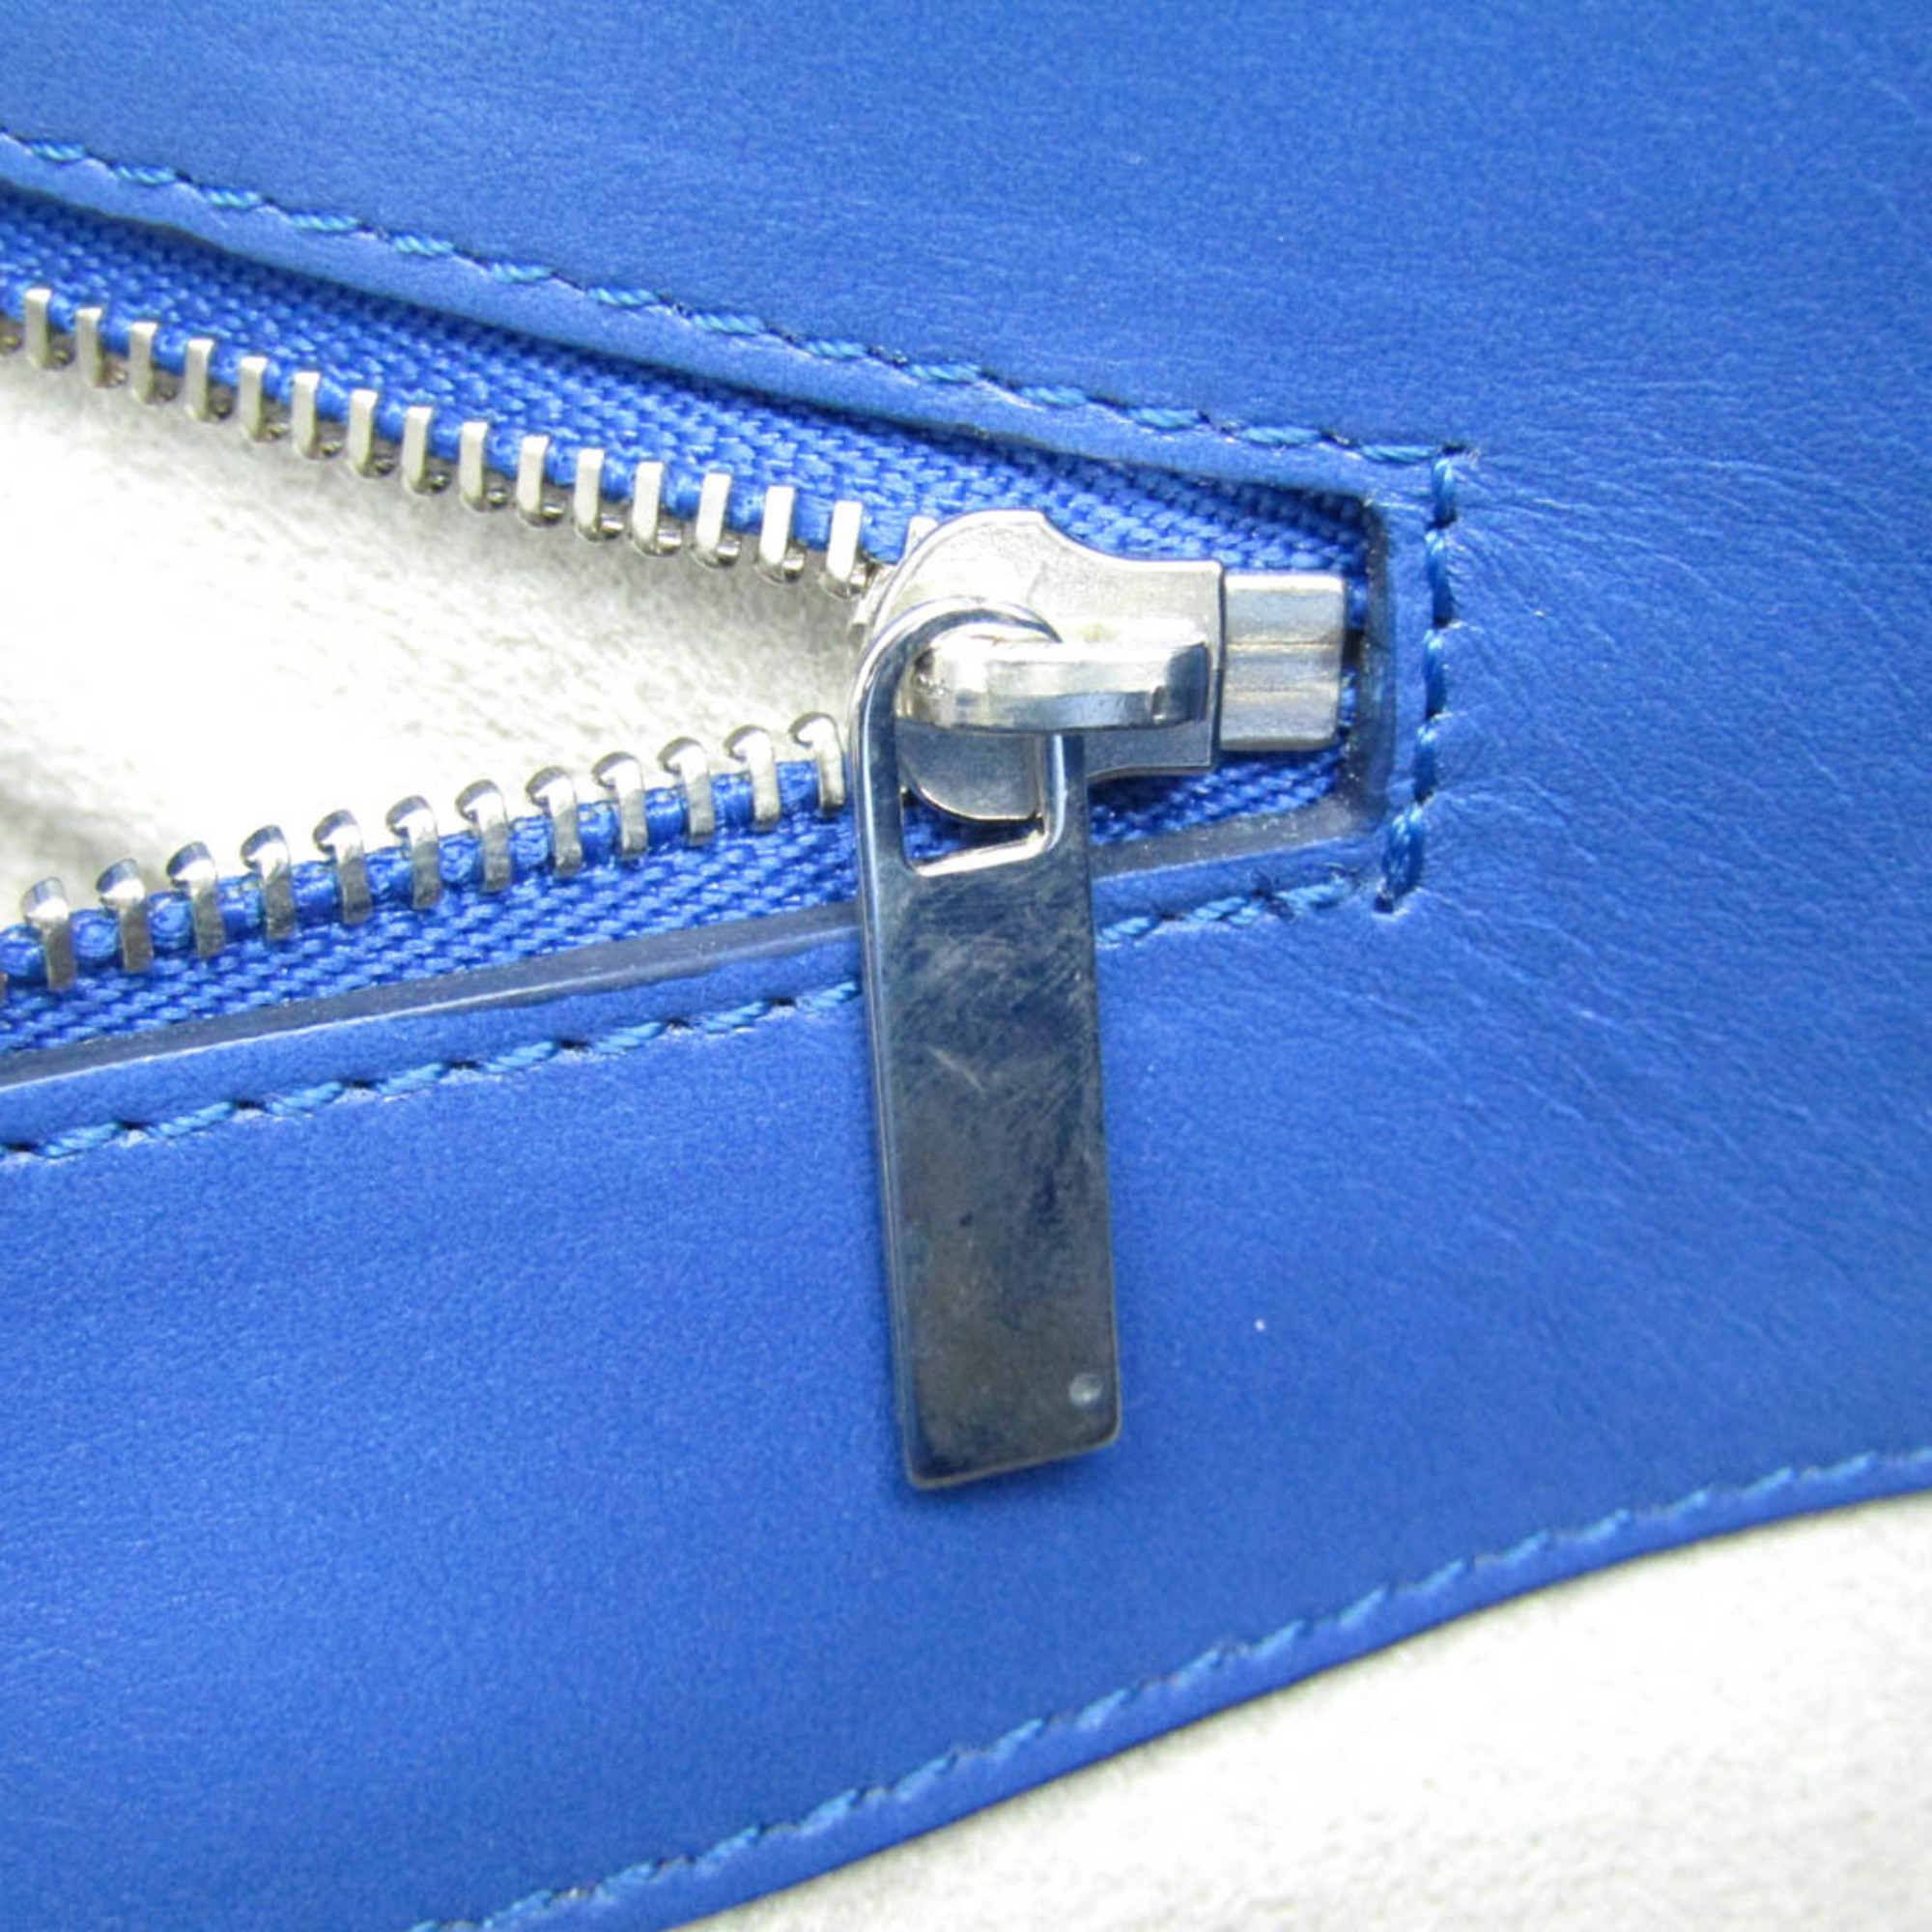 Jimmy Choo Riley Women's Leather Handbag Royal Blue